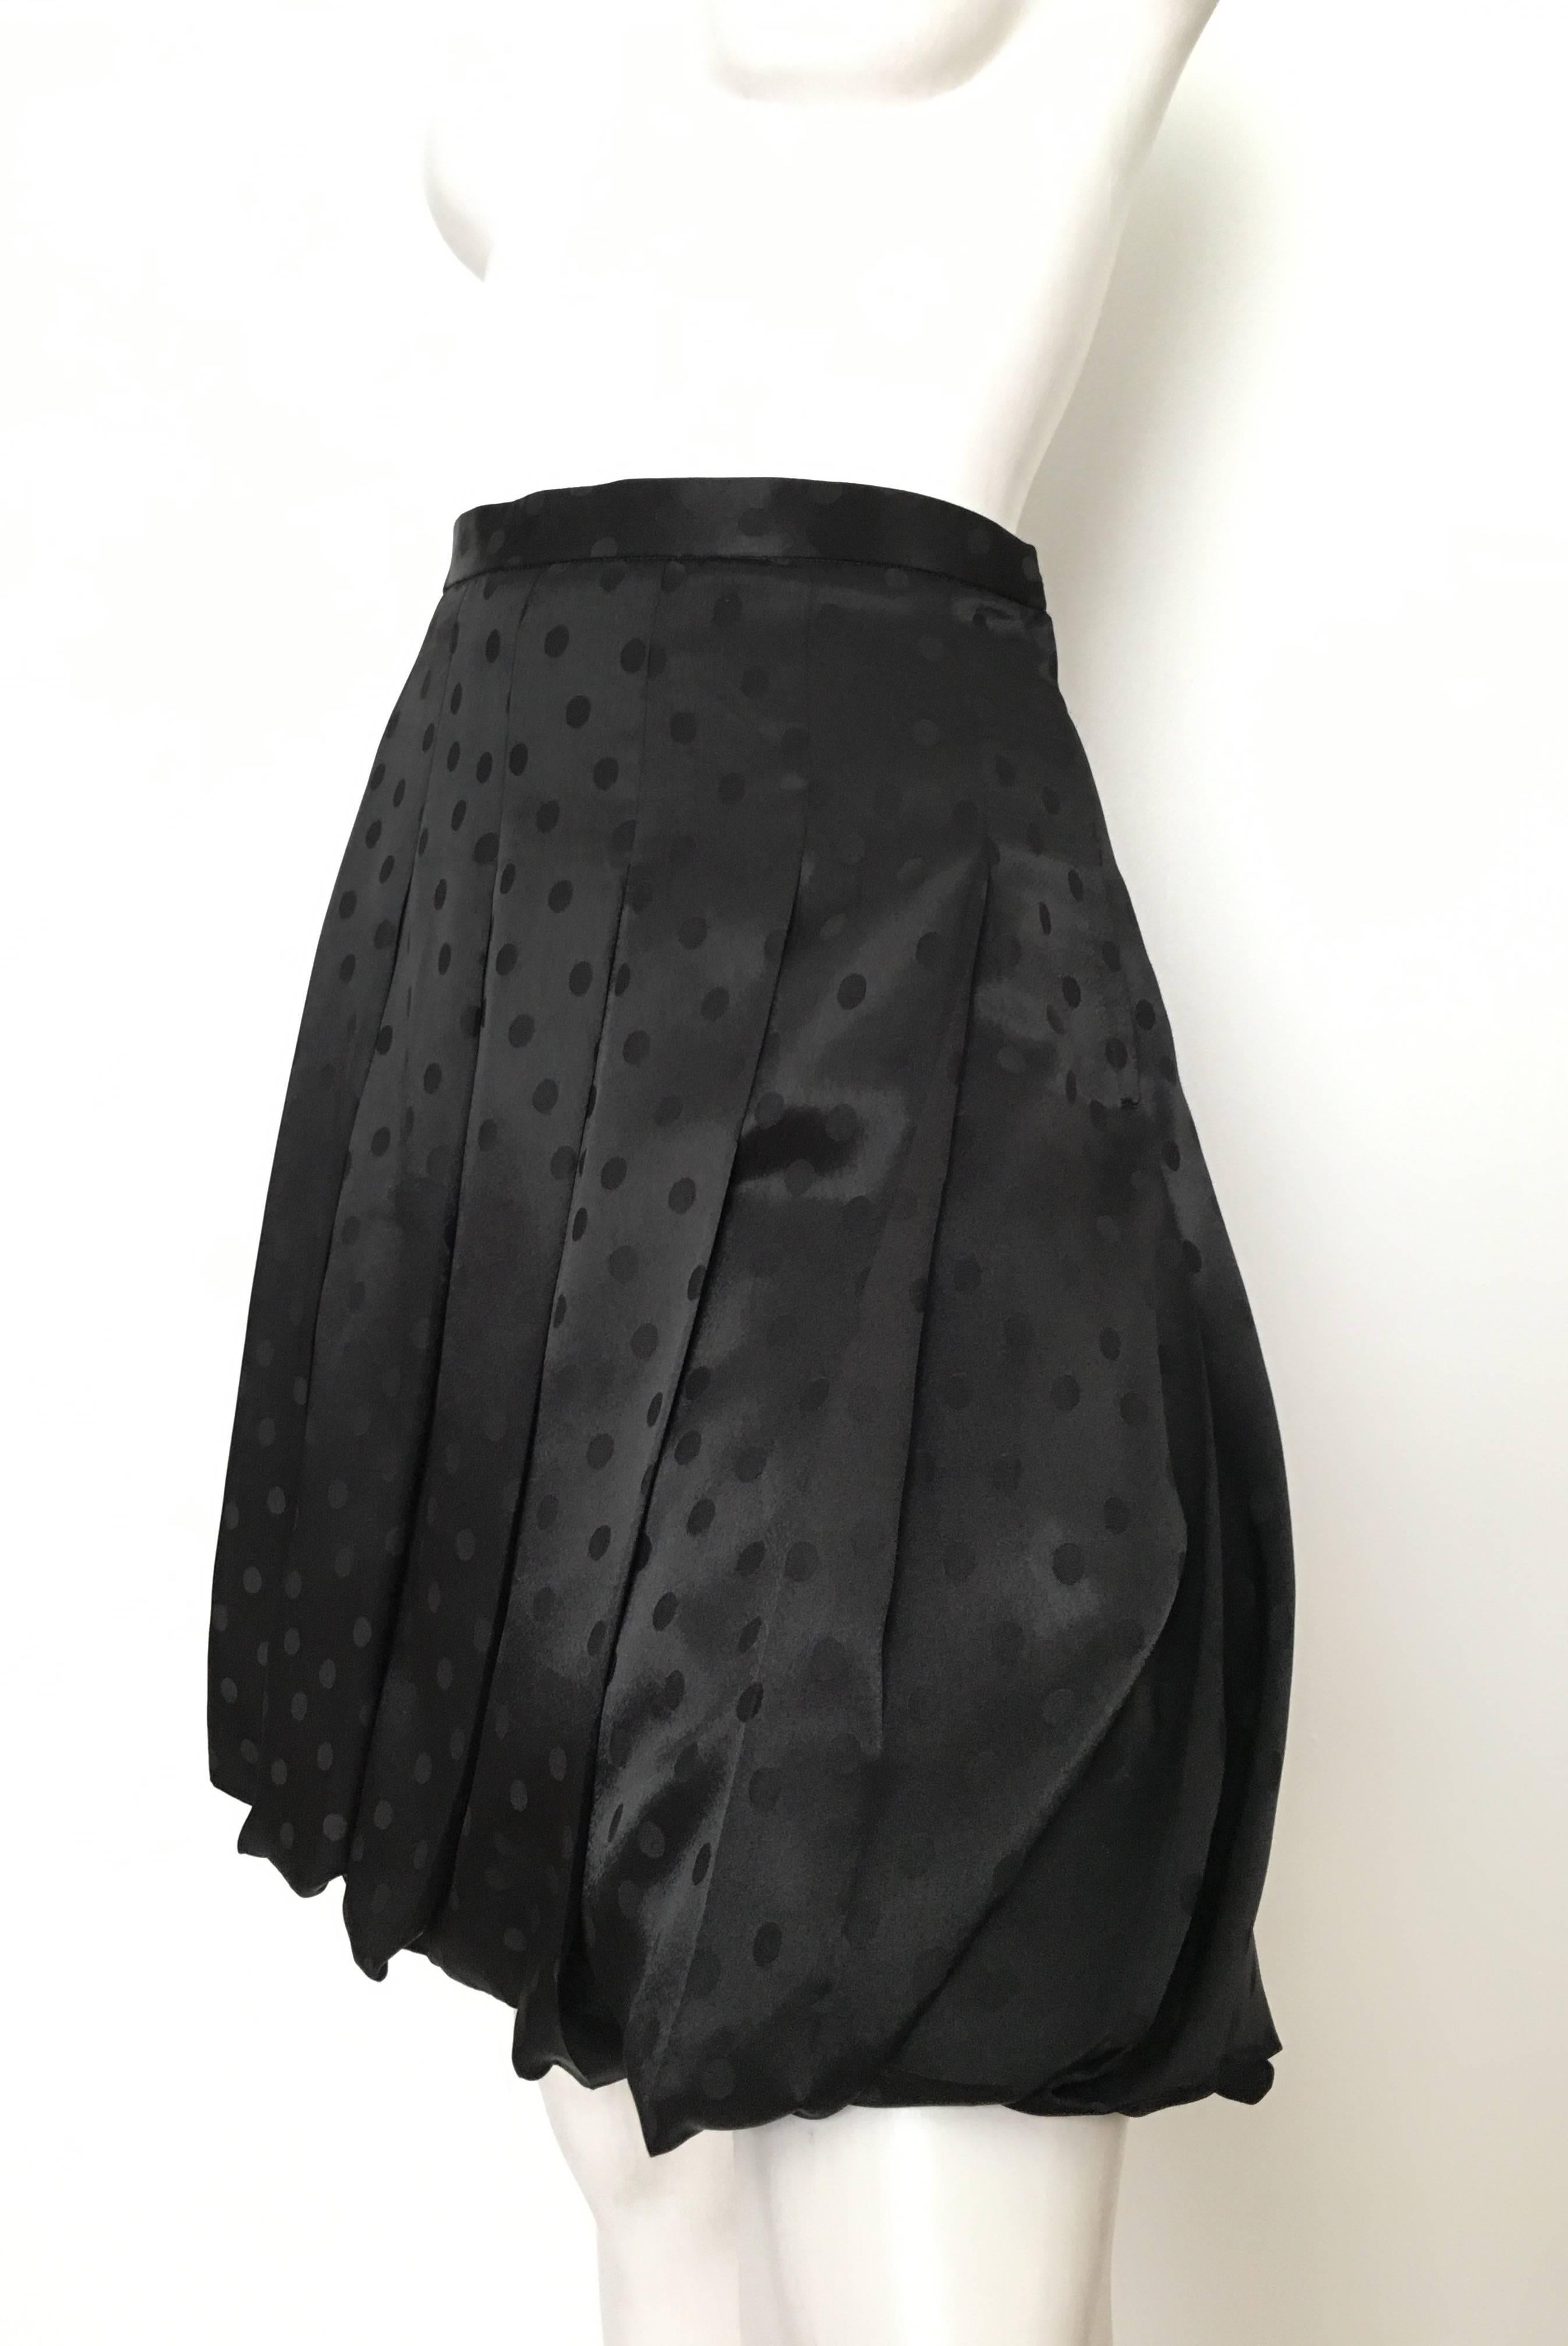 Comme des Garçons Black Polka Dot Pleated Bubble Skirt Size 6. For Sale 2